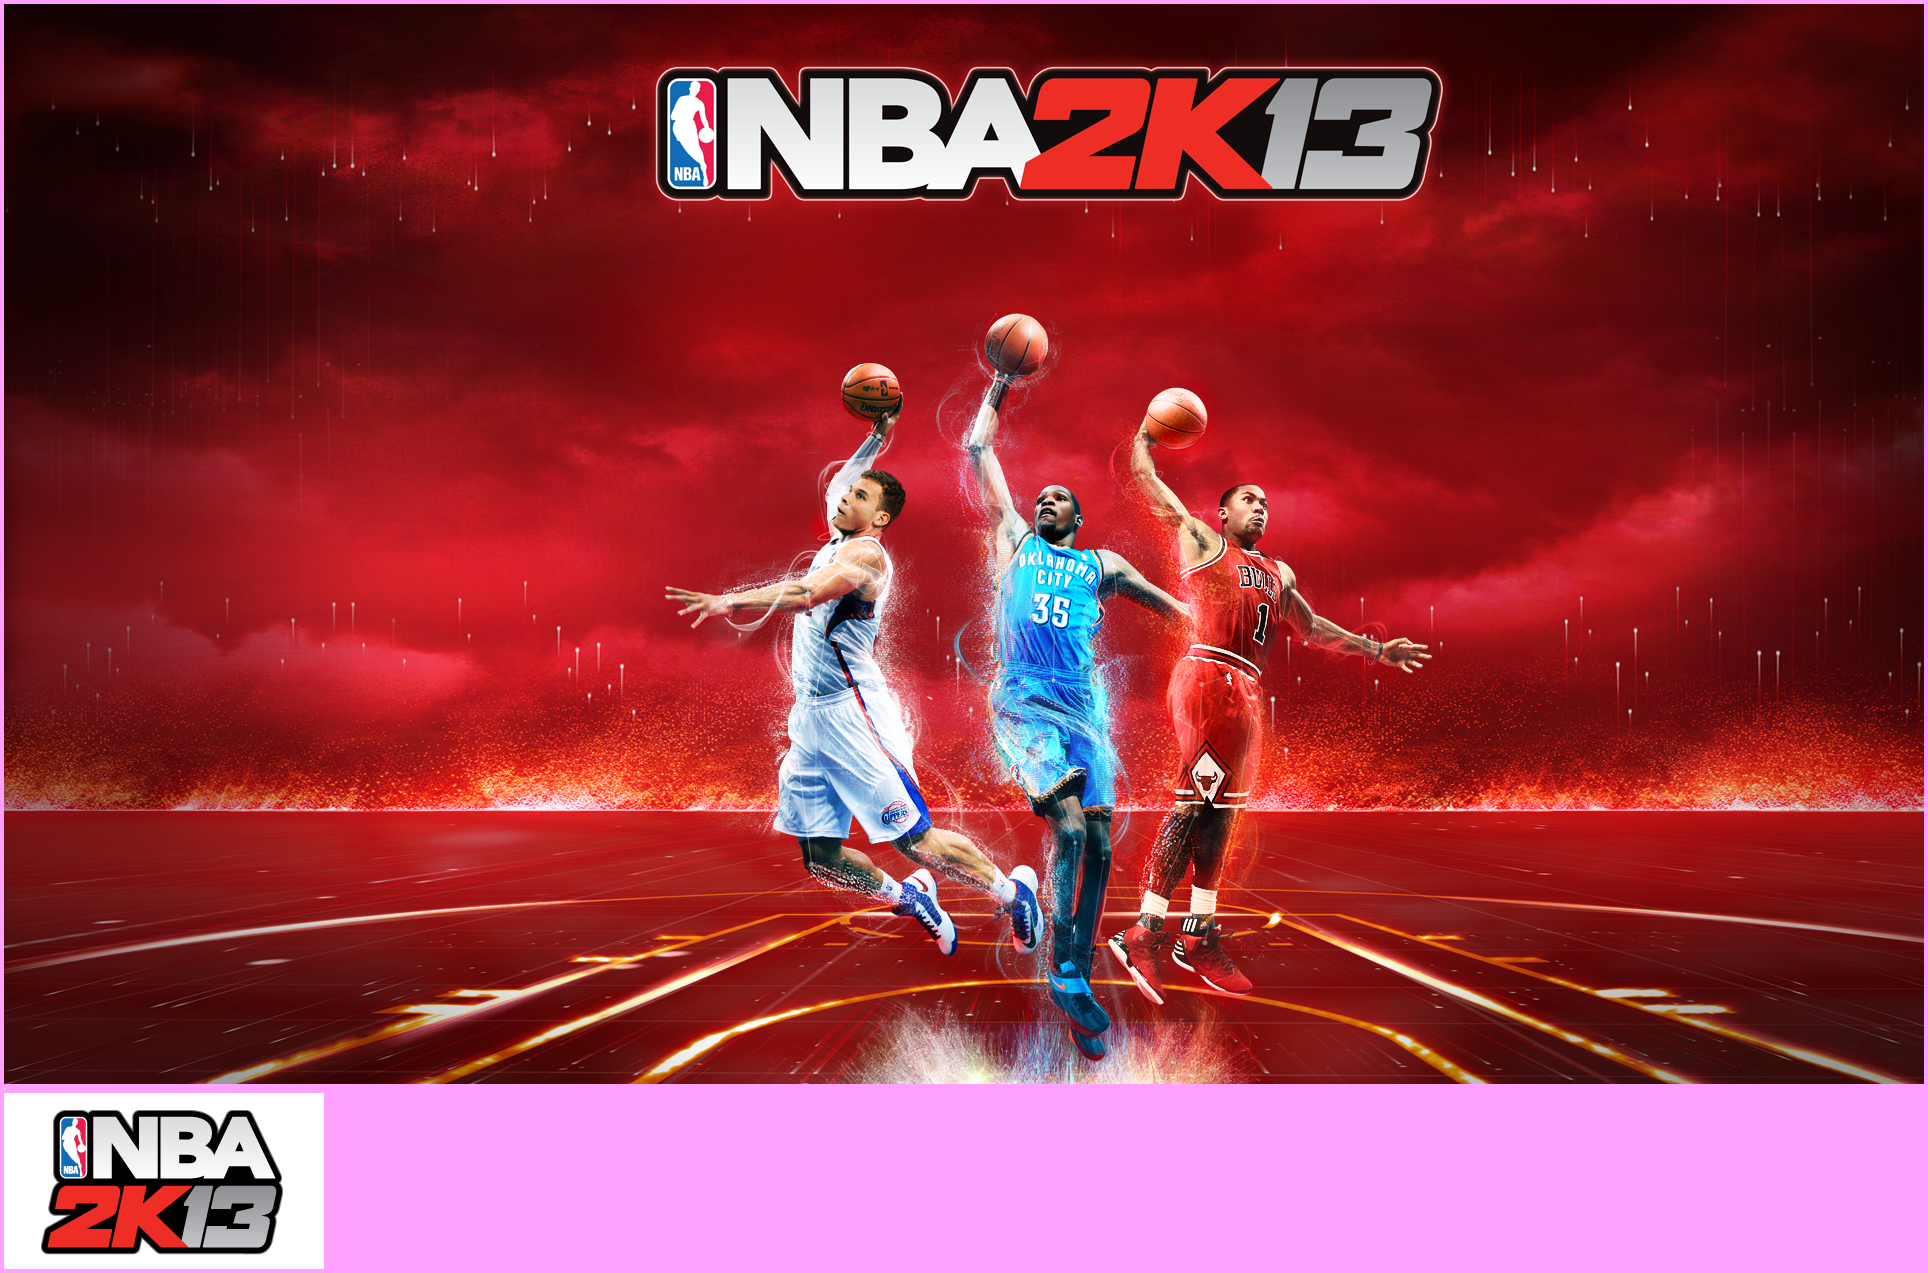 NBA 2K13 - Game Banner & Icon